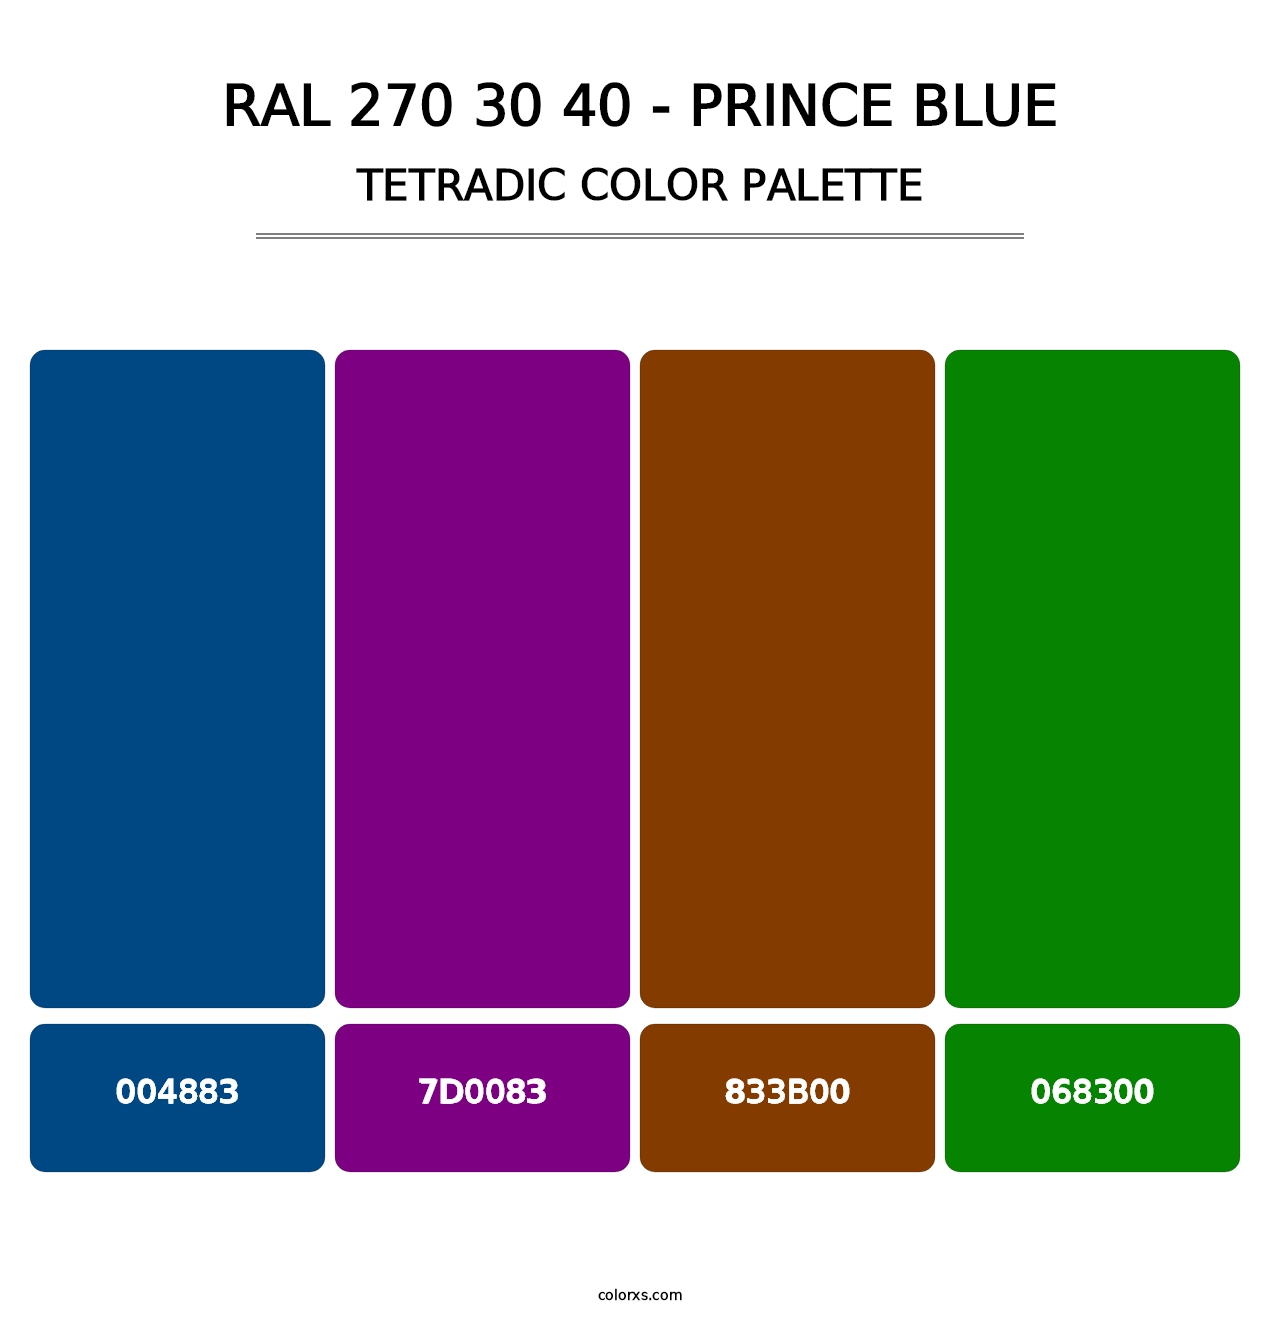 RAL 270 30 40 - Prince Blue - Tetradic Color Palette